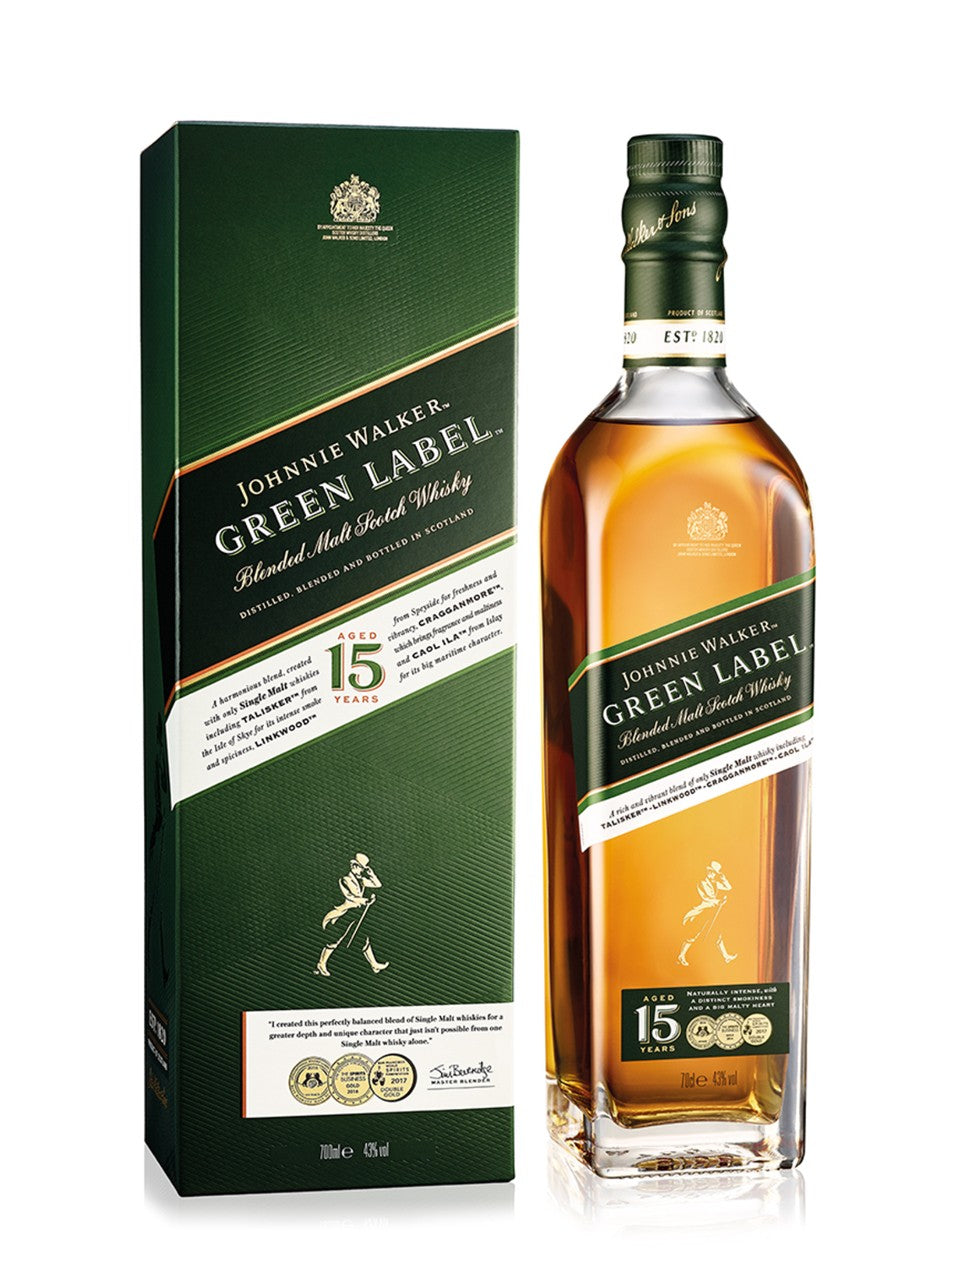 Johnnie Walker Green Label Scotch Whisky 750 ml bottle